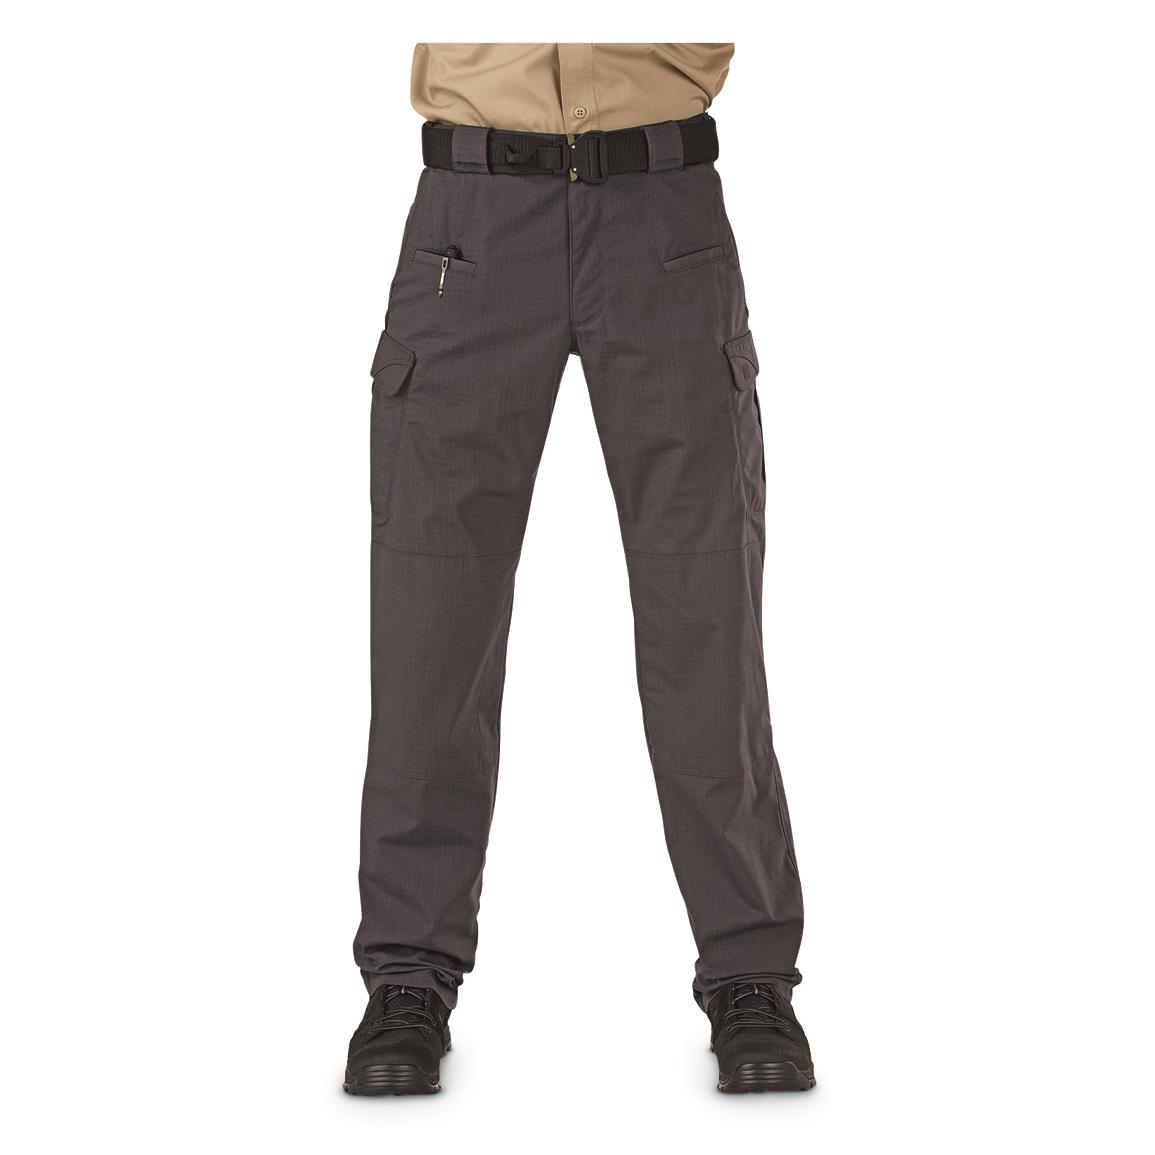 5.11 Tactical Men's Stryke Pants, Charcoal